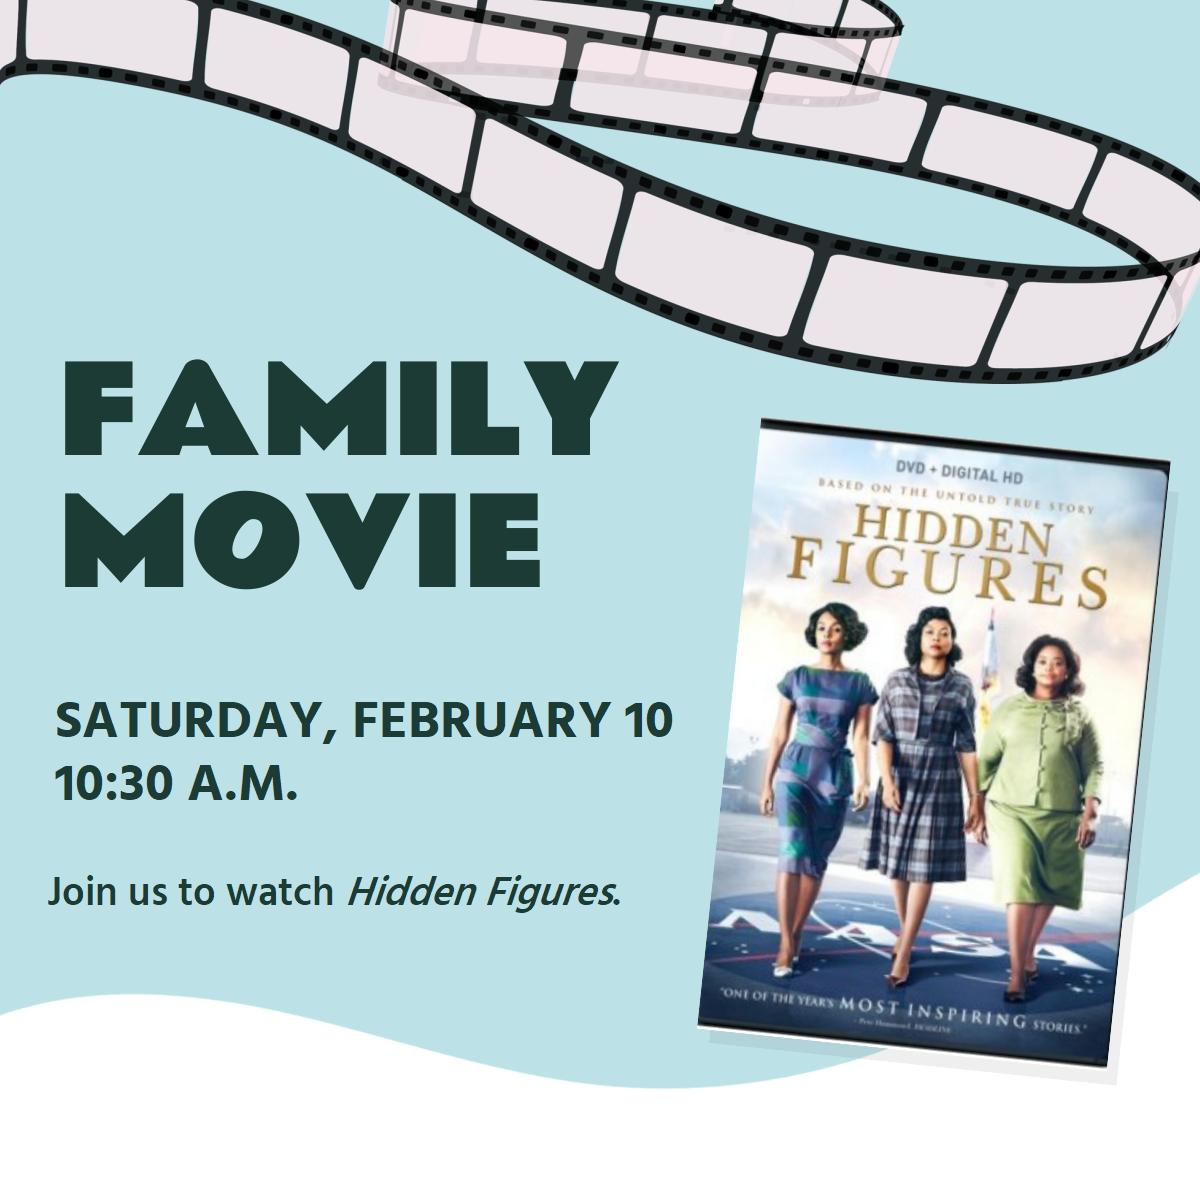 Family Movie - Hidden Figures - Saturday Feb. 10, 10:30am